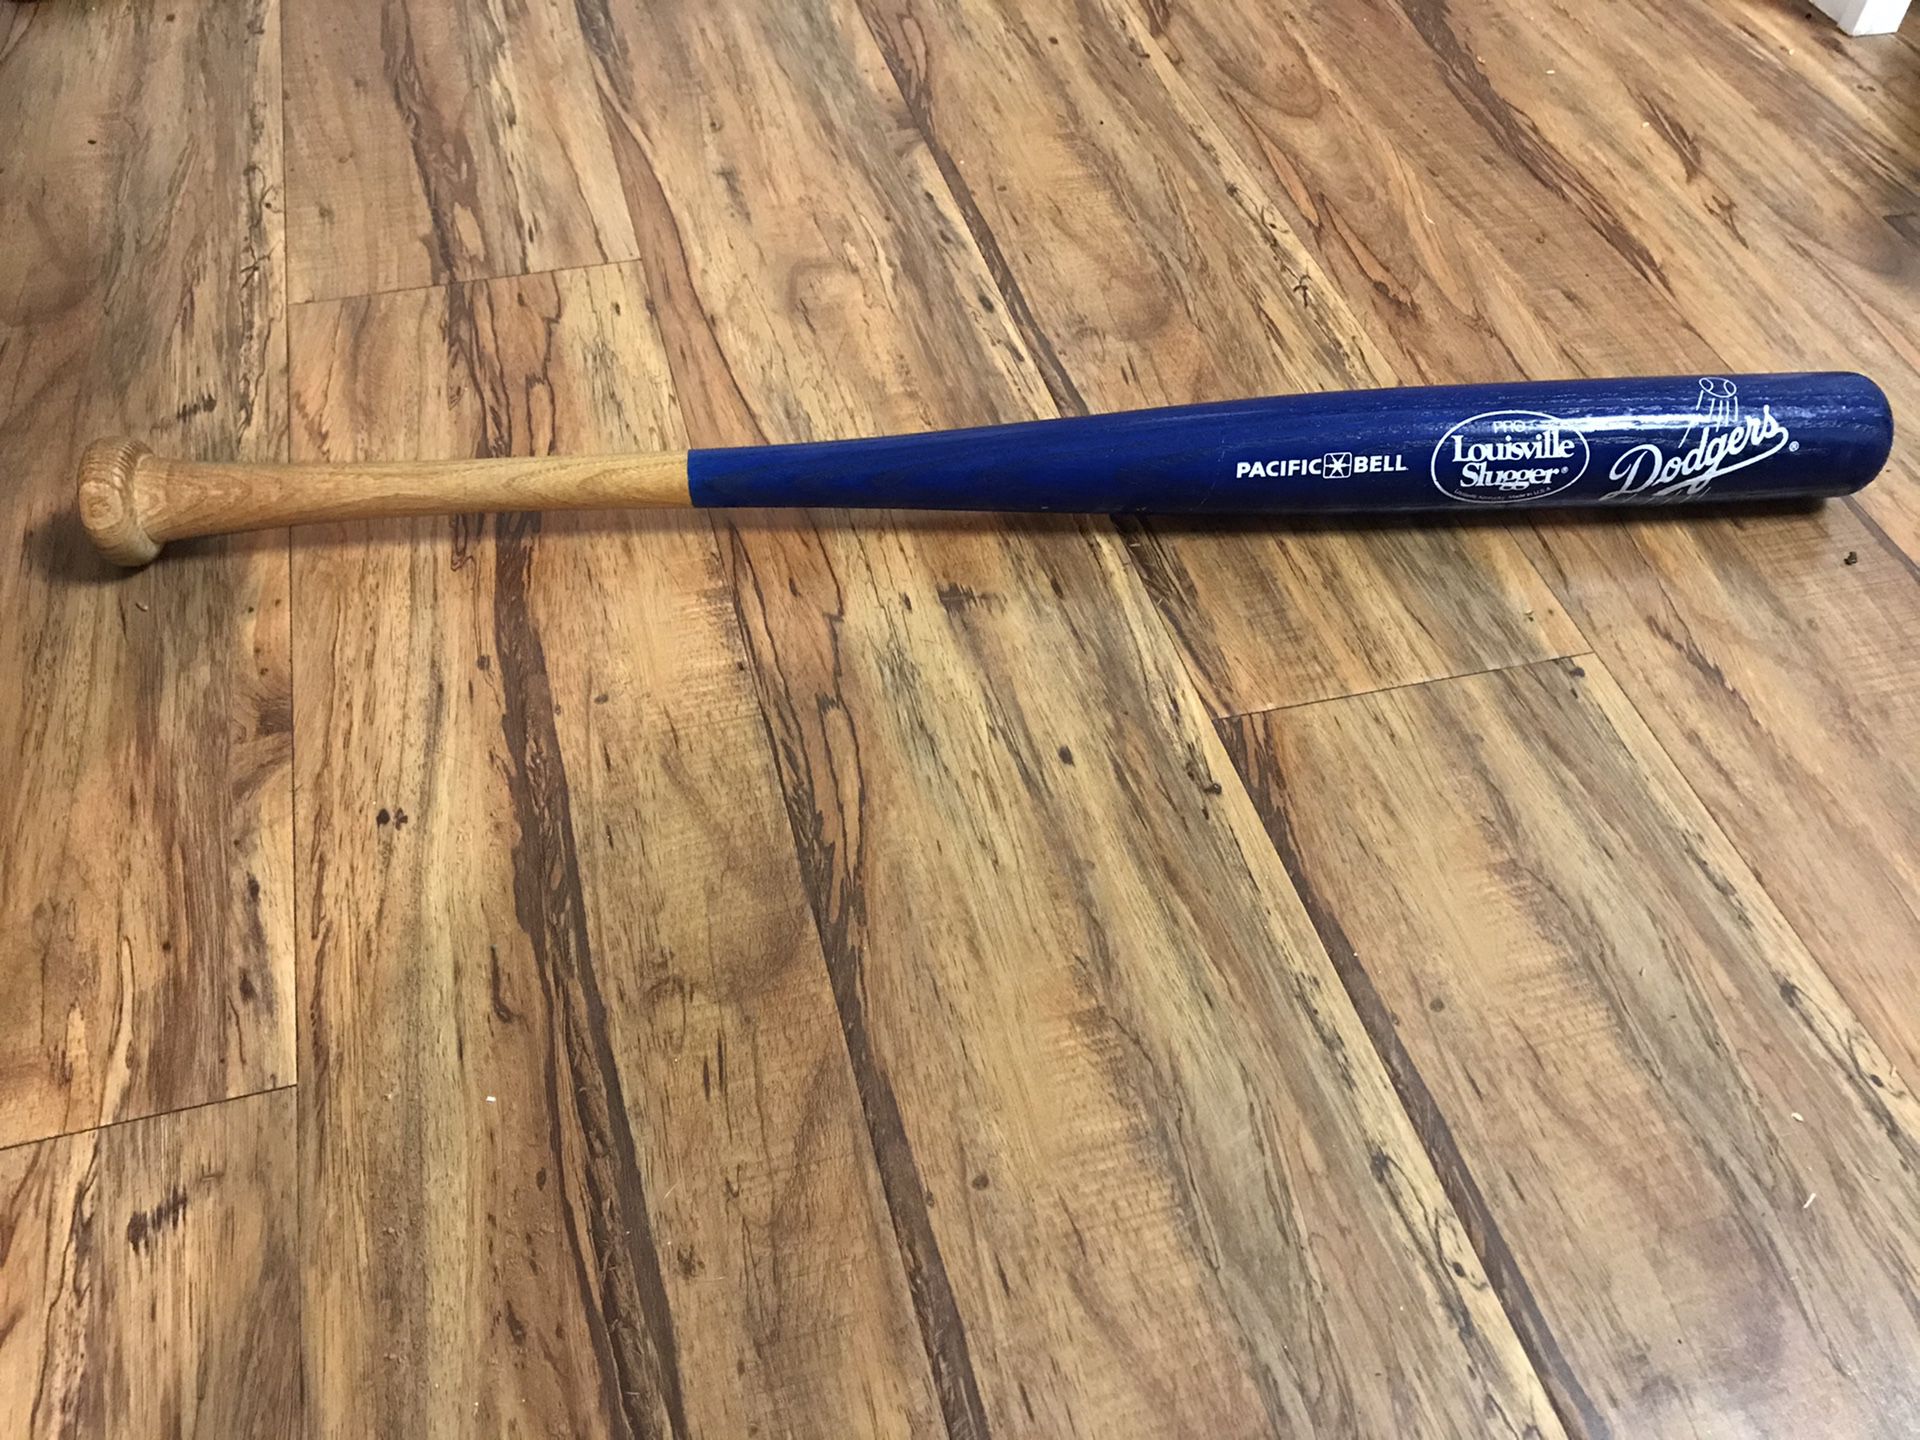 Dodger baseball bat